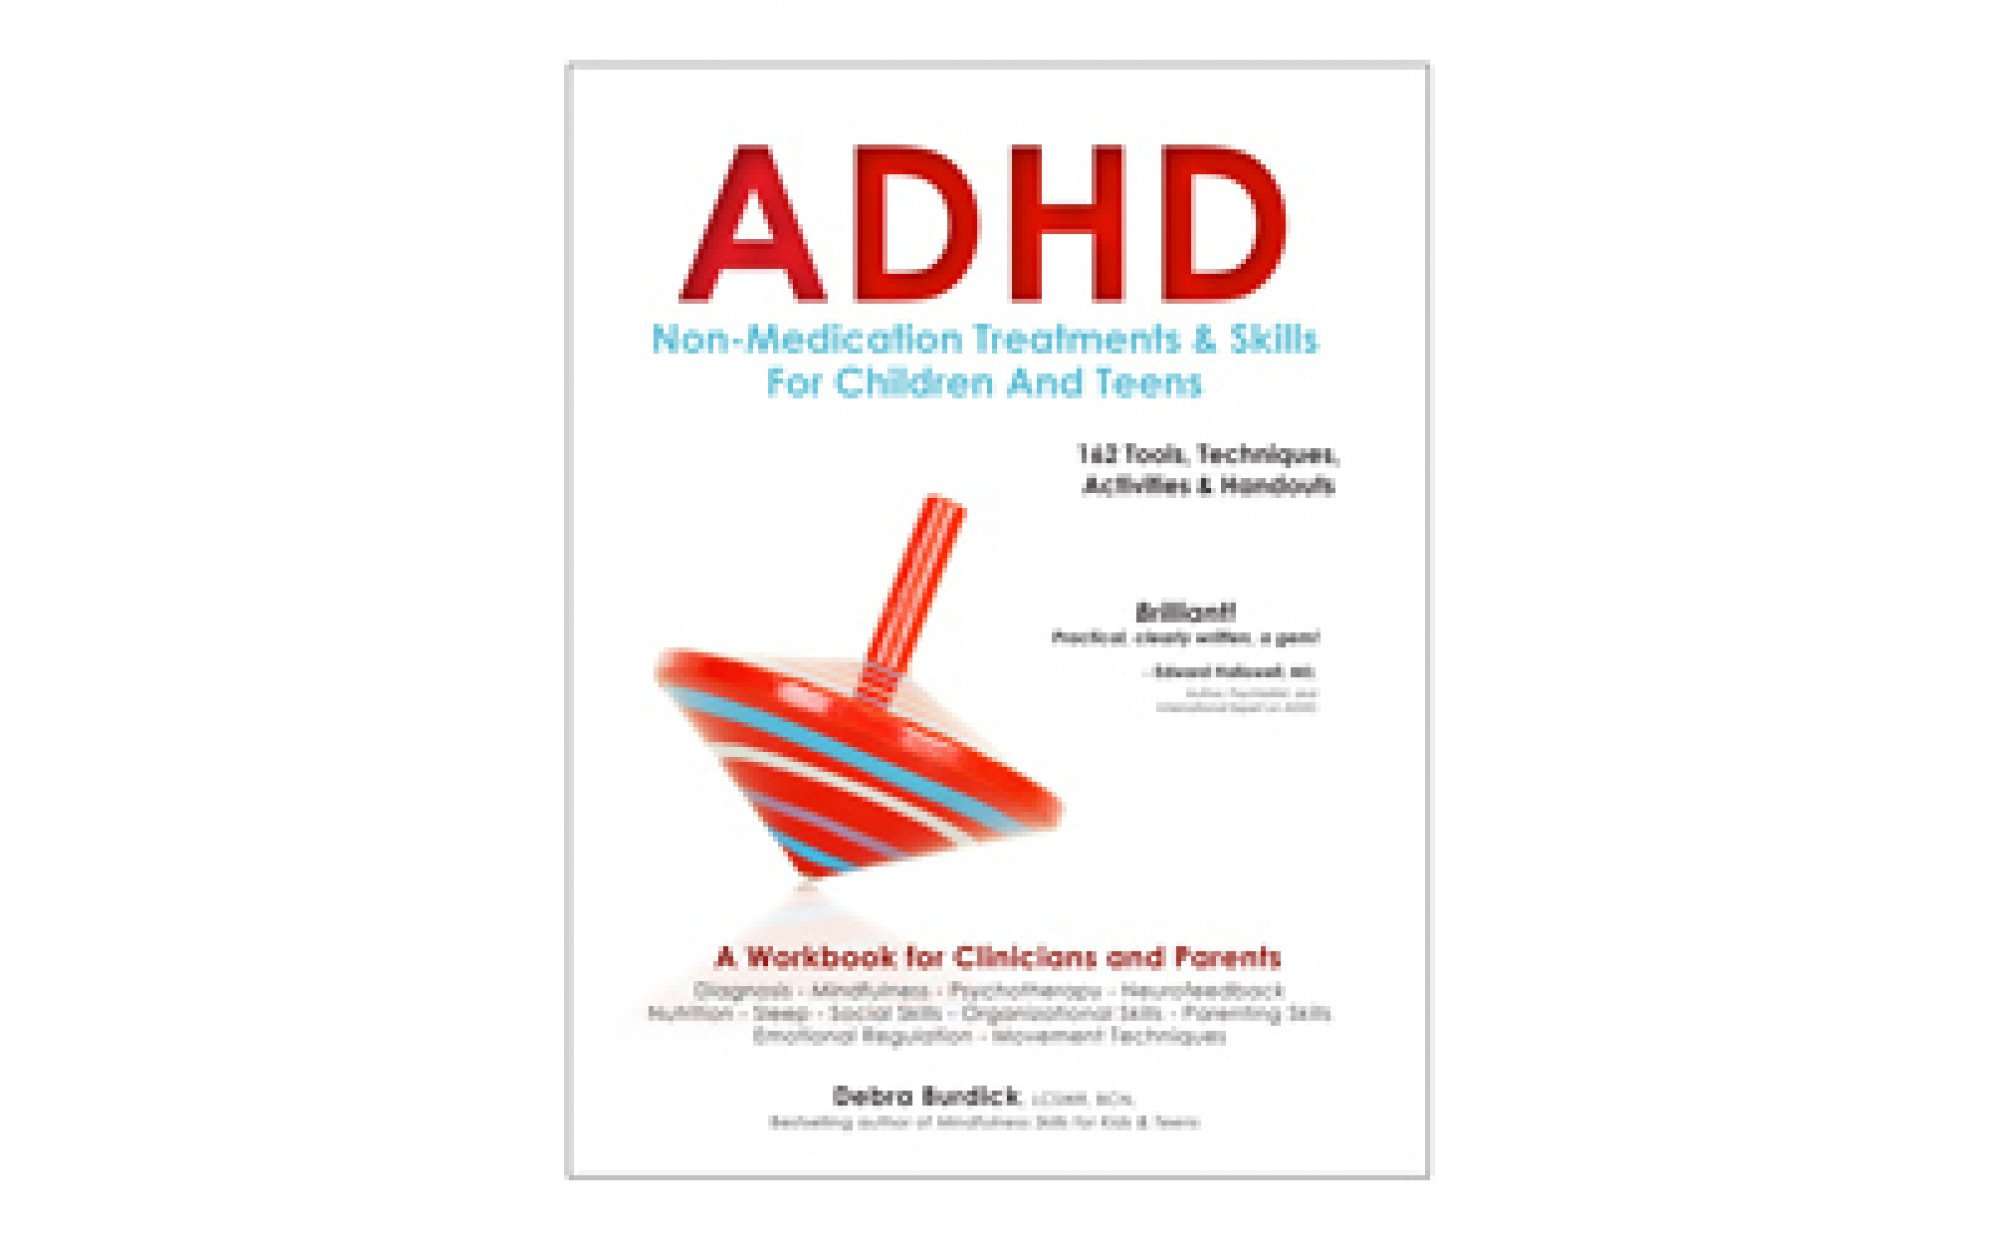 ADHD: Non